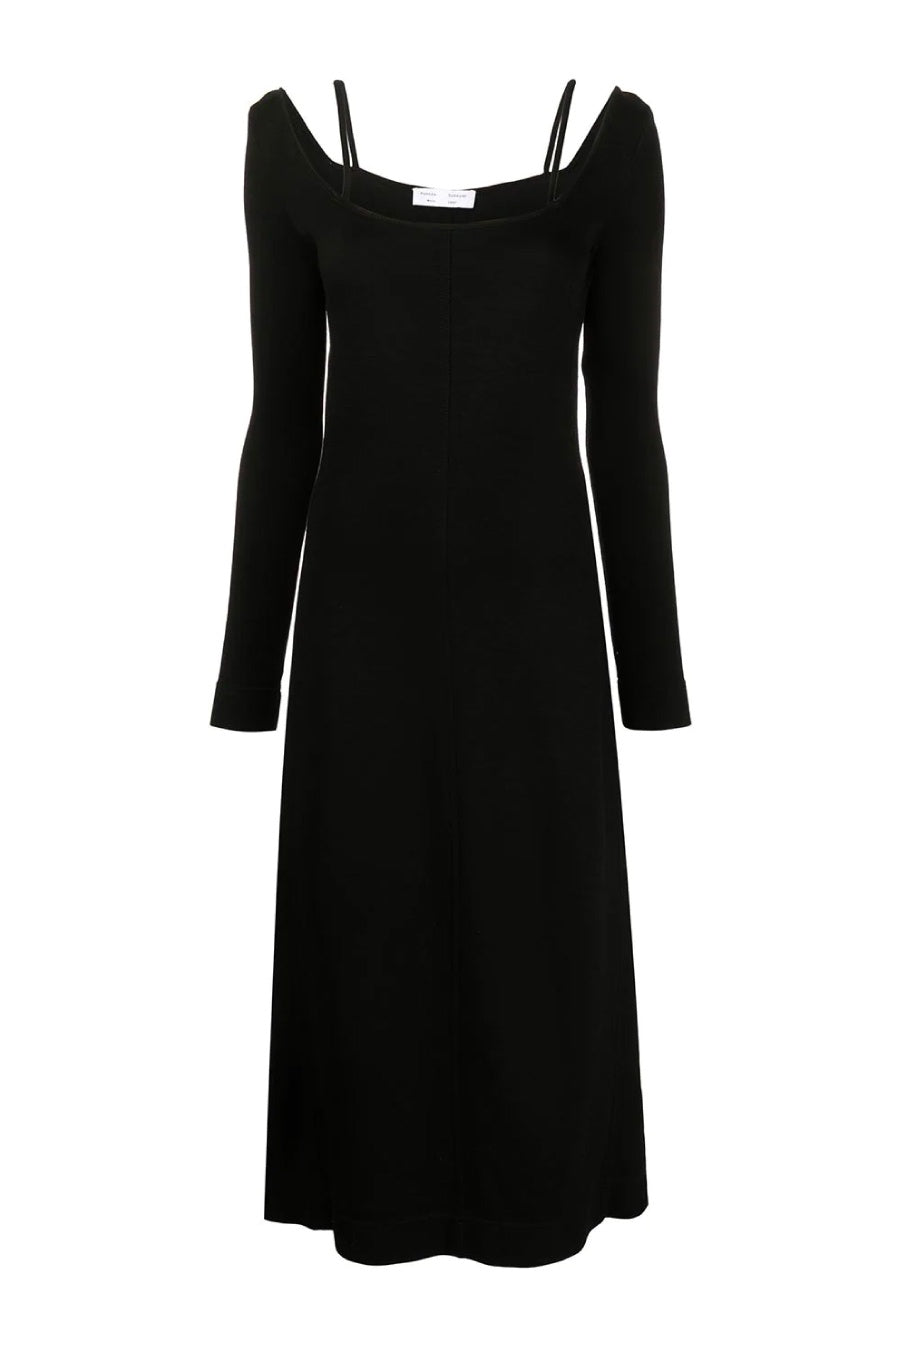 Proenza Schouler White Label Compact Jersey Midi Dress - Black